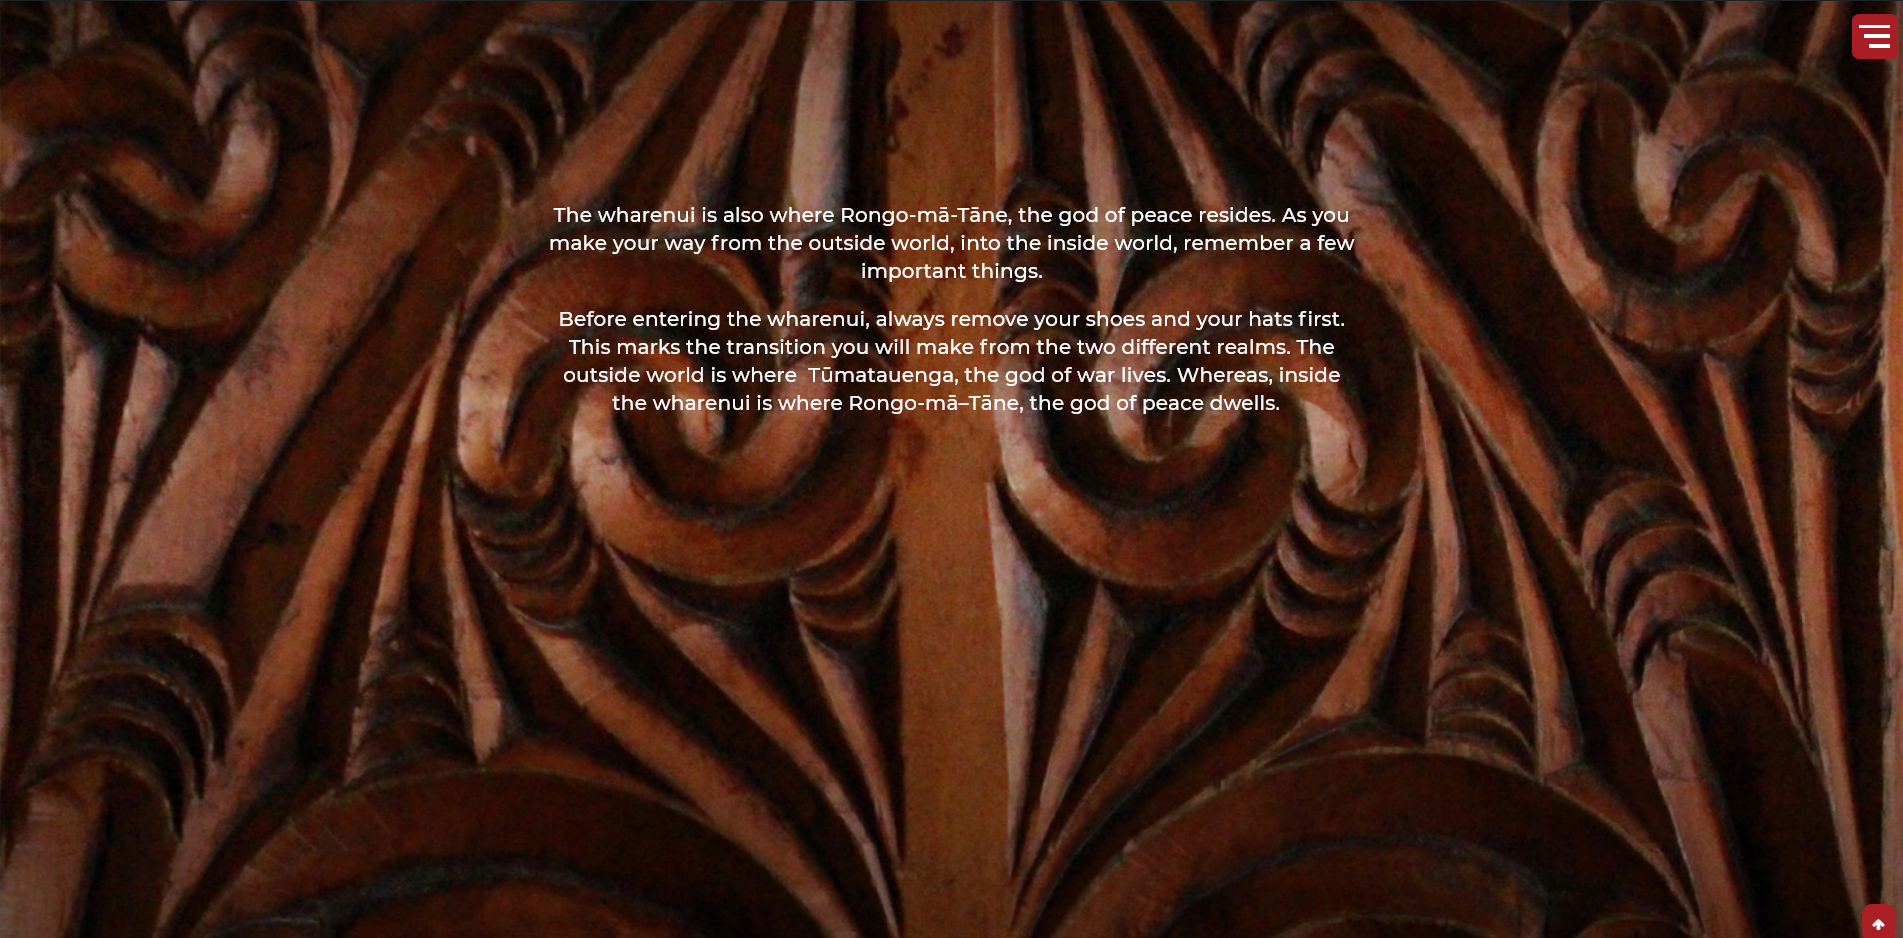 Maori carving image